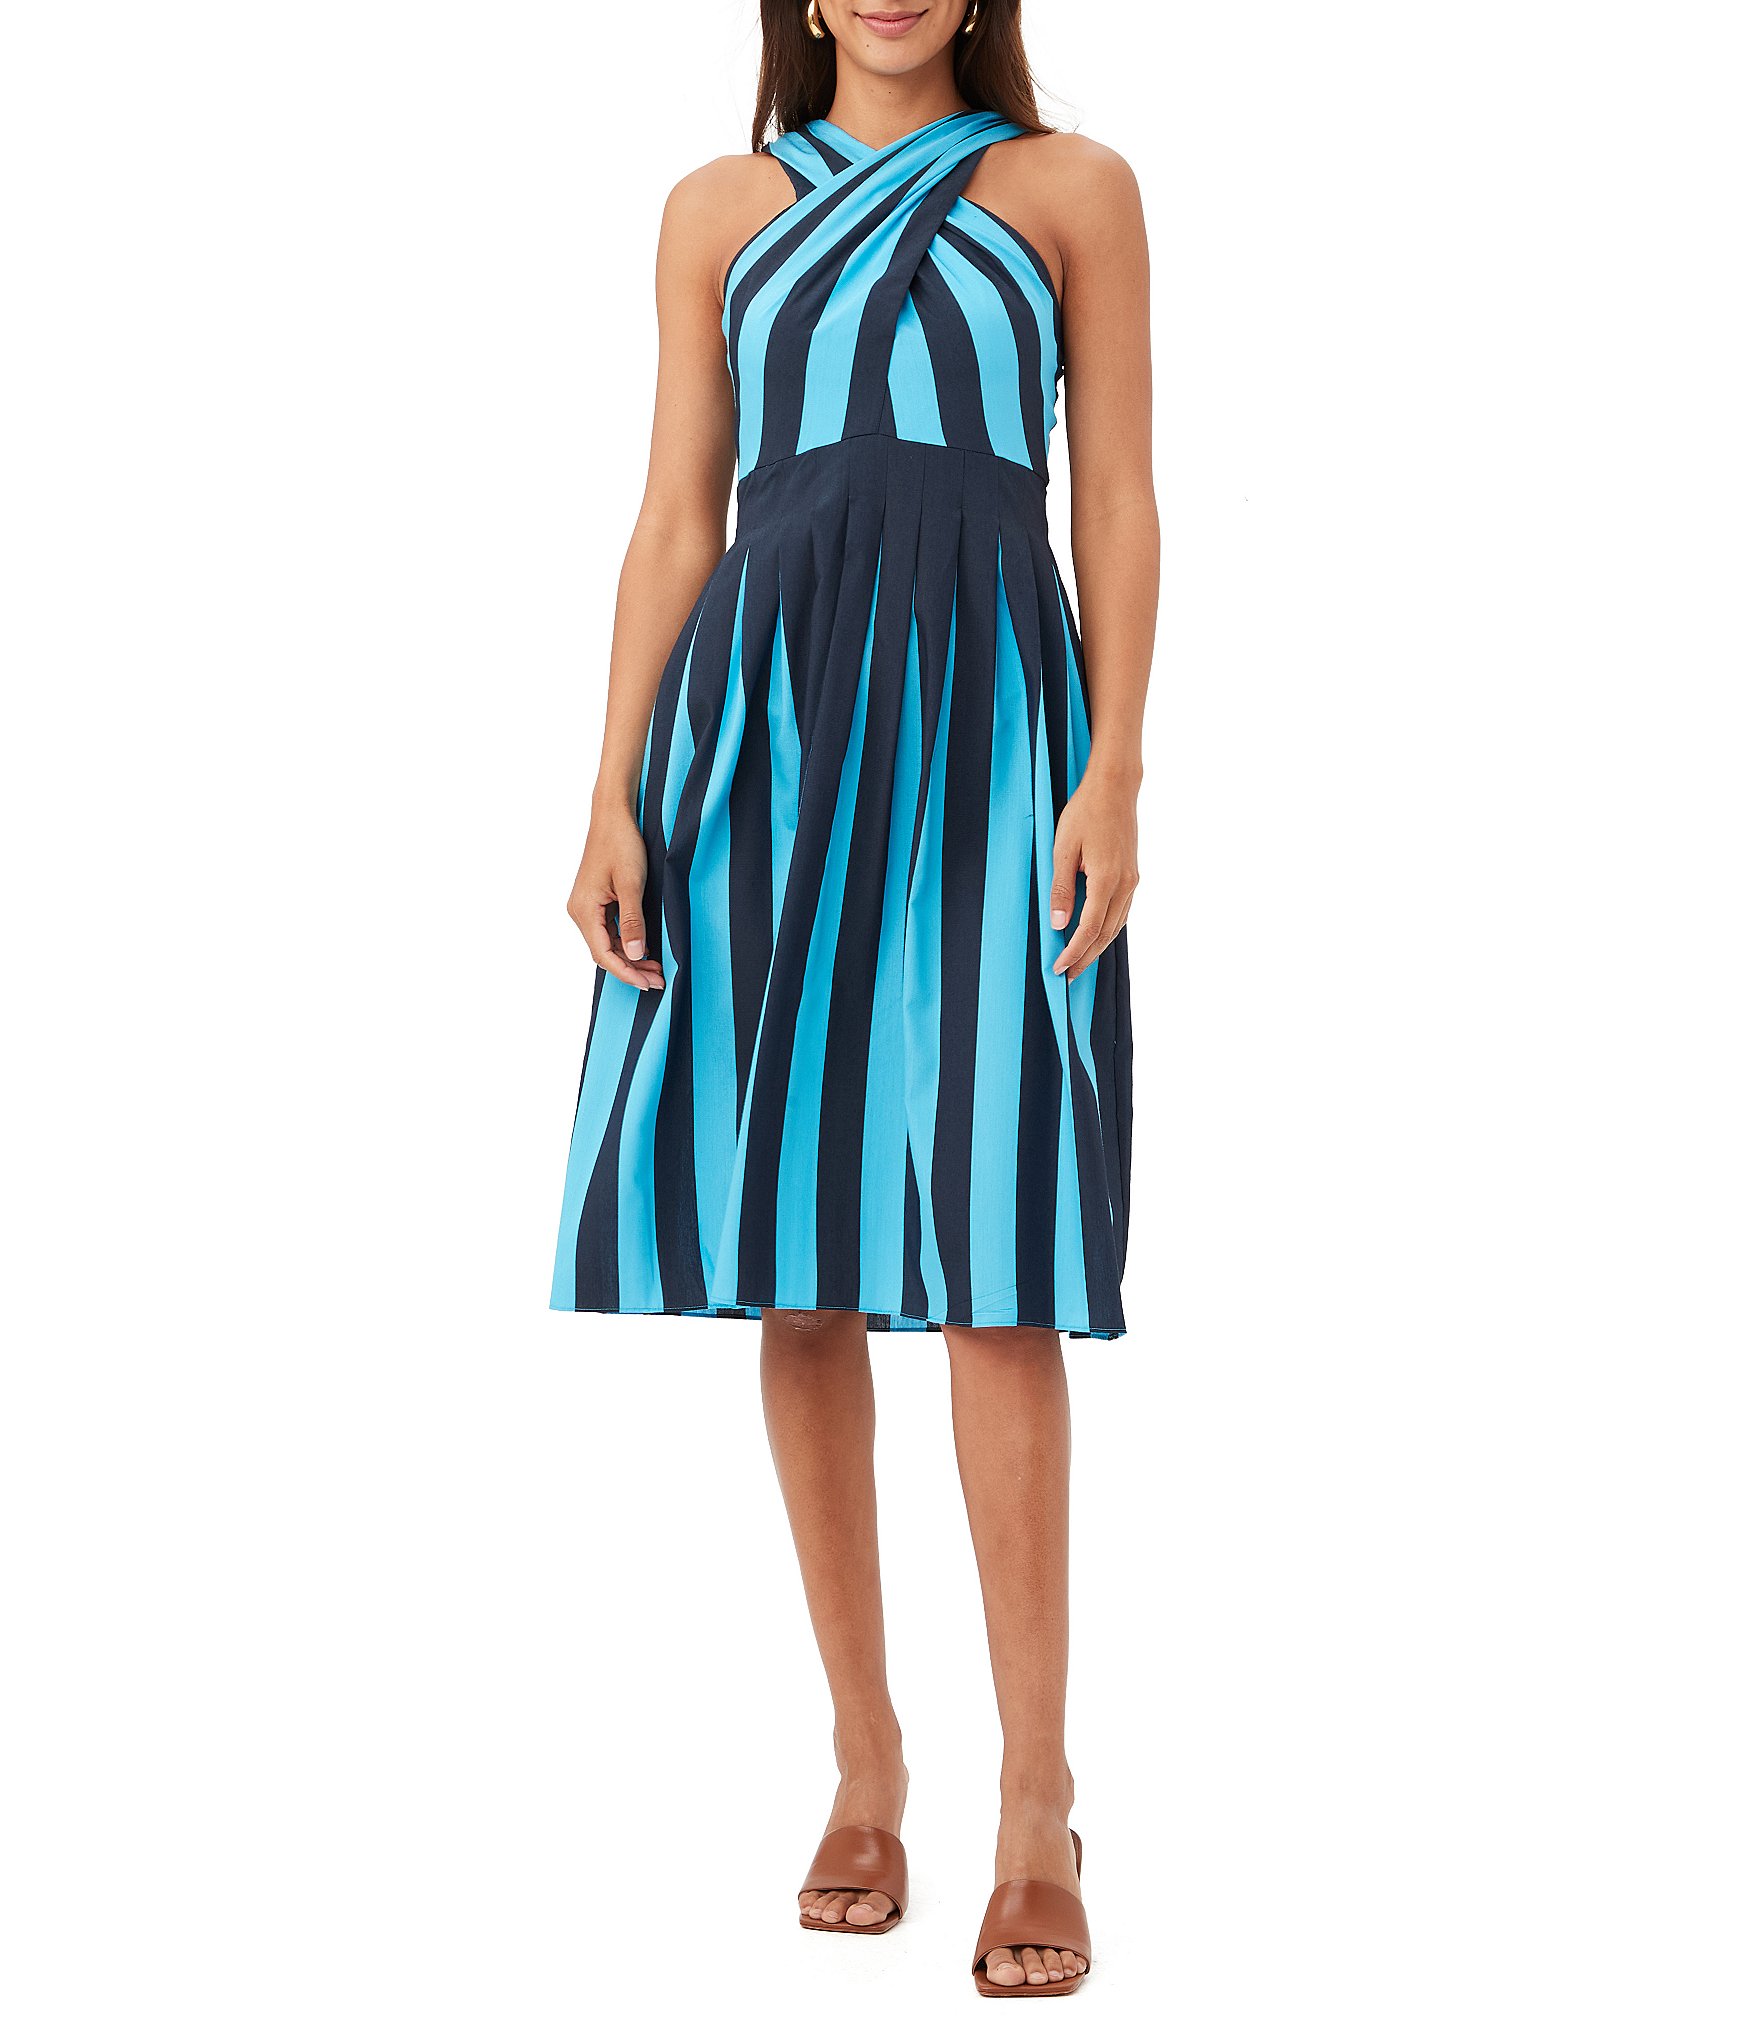 Trina Turk Trina Alicina Stripe Halter Shift Dress, $188, Nordstrom